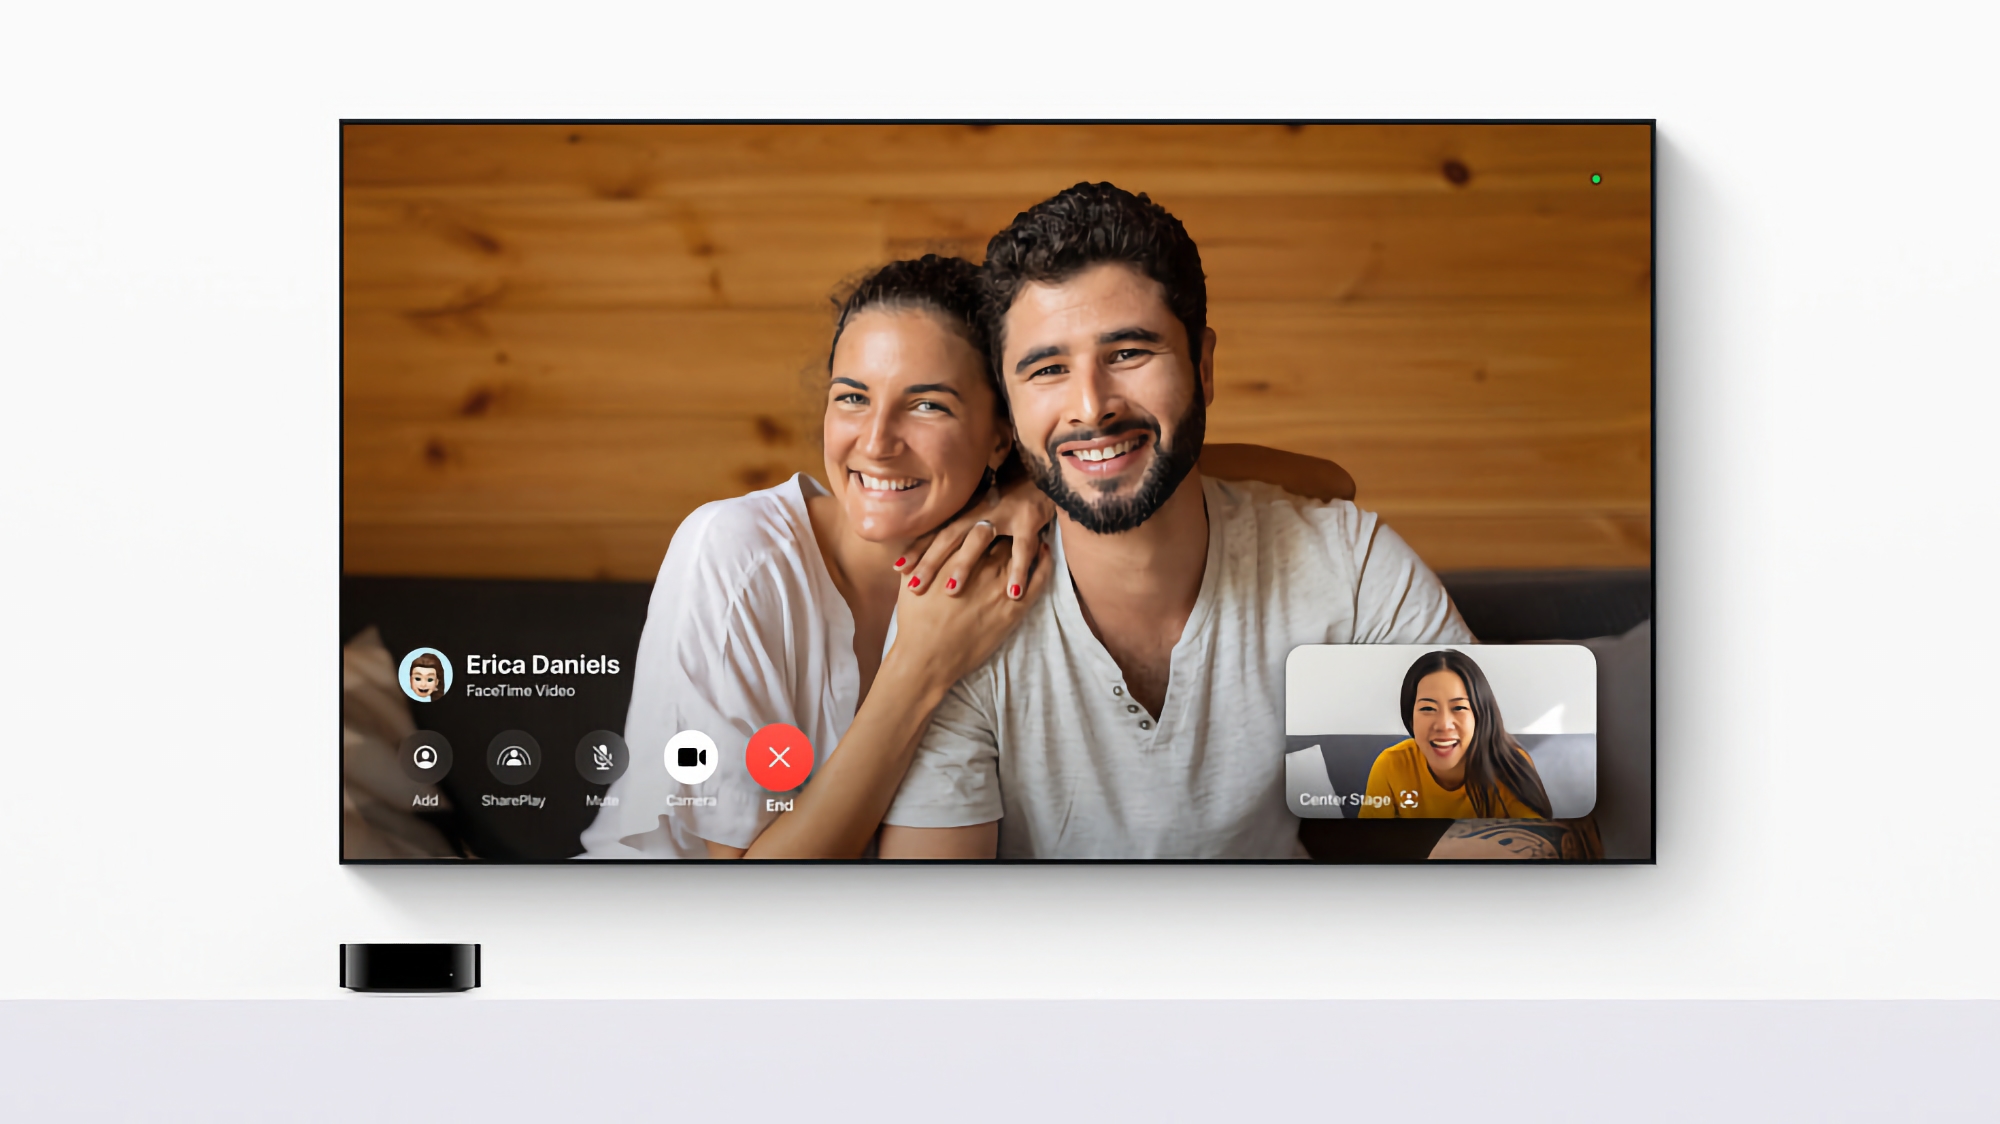 Bloomberg: future version of Apple TV could get an inbuilt camera for FaceTime video calls